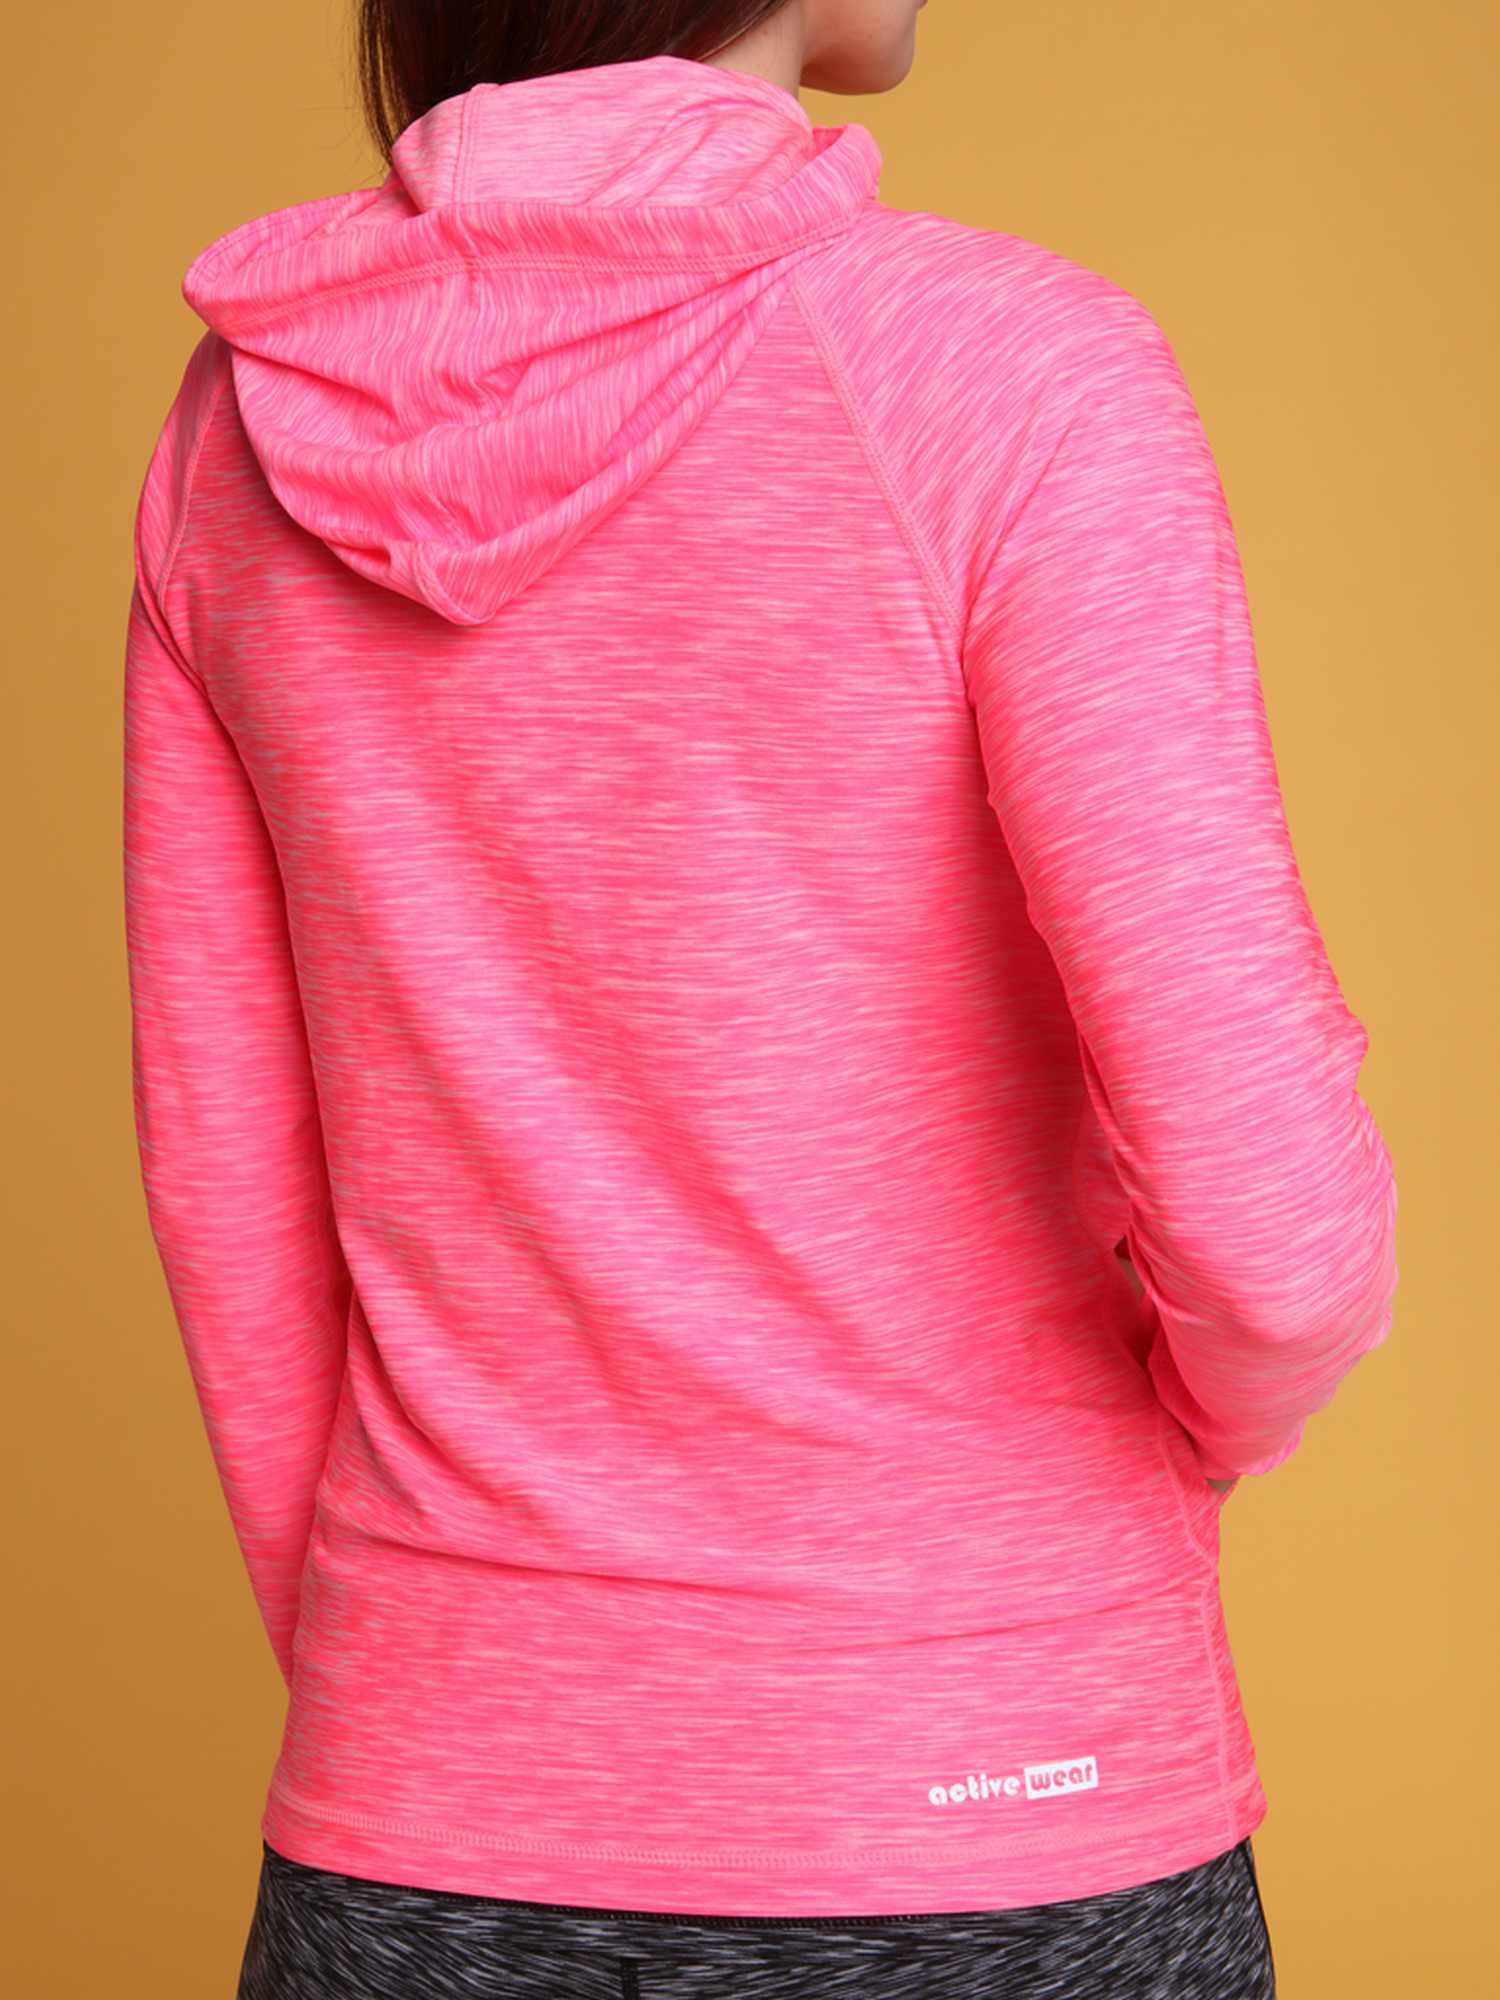 Women's functional sweatshirt